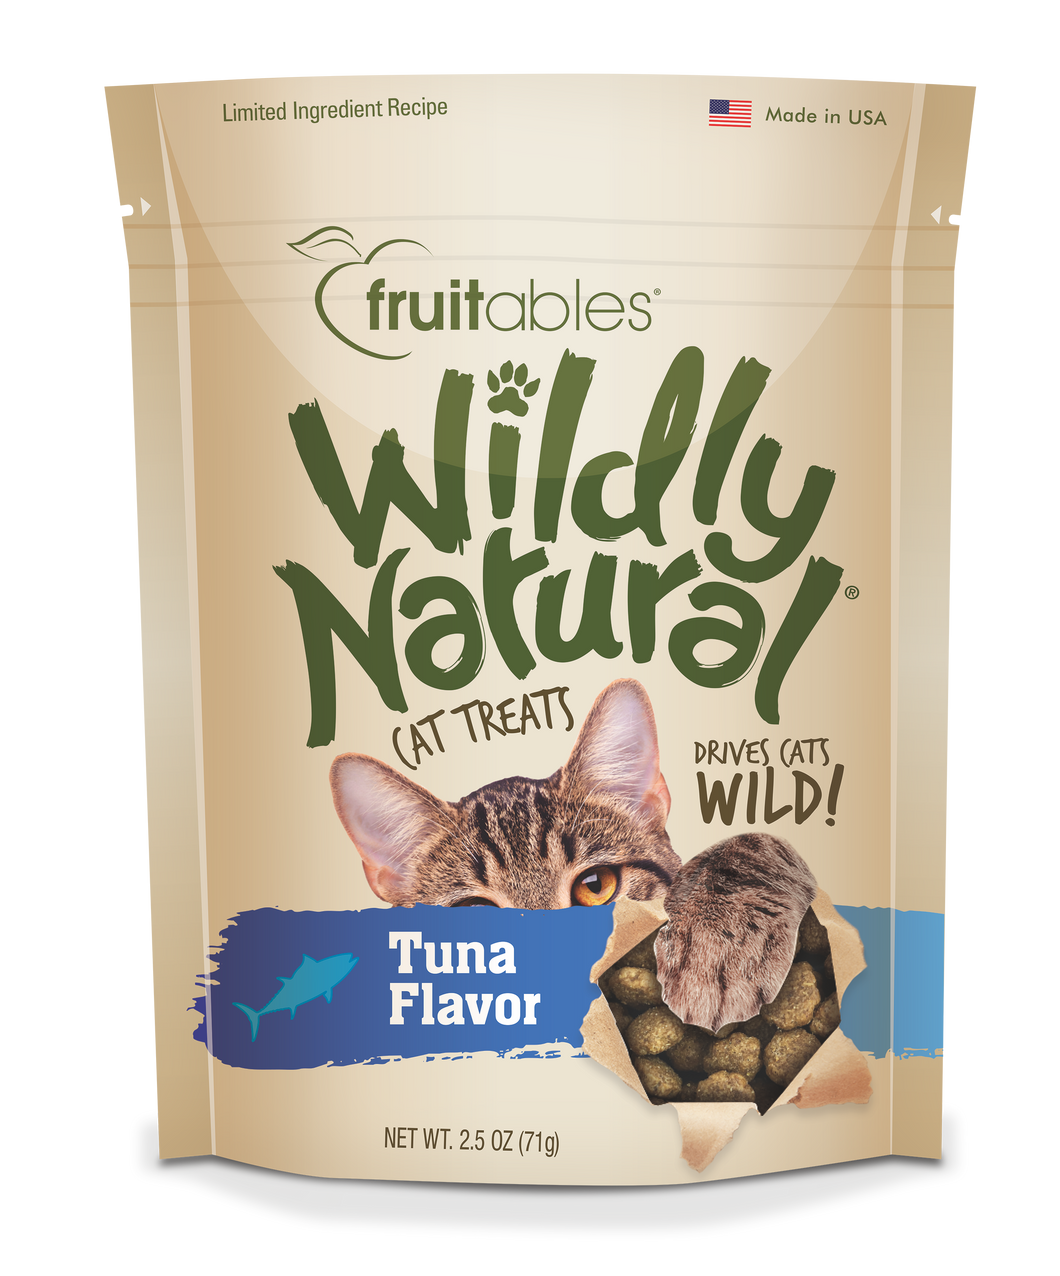 Fruitables Wildly Natural Tuna Flavor Cat Treats